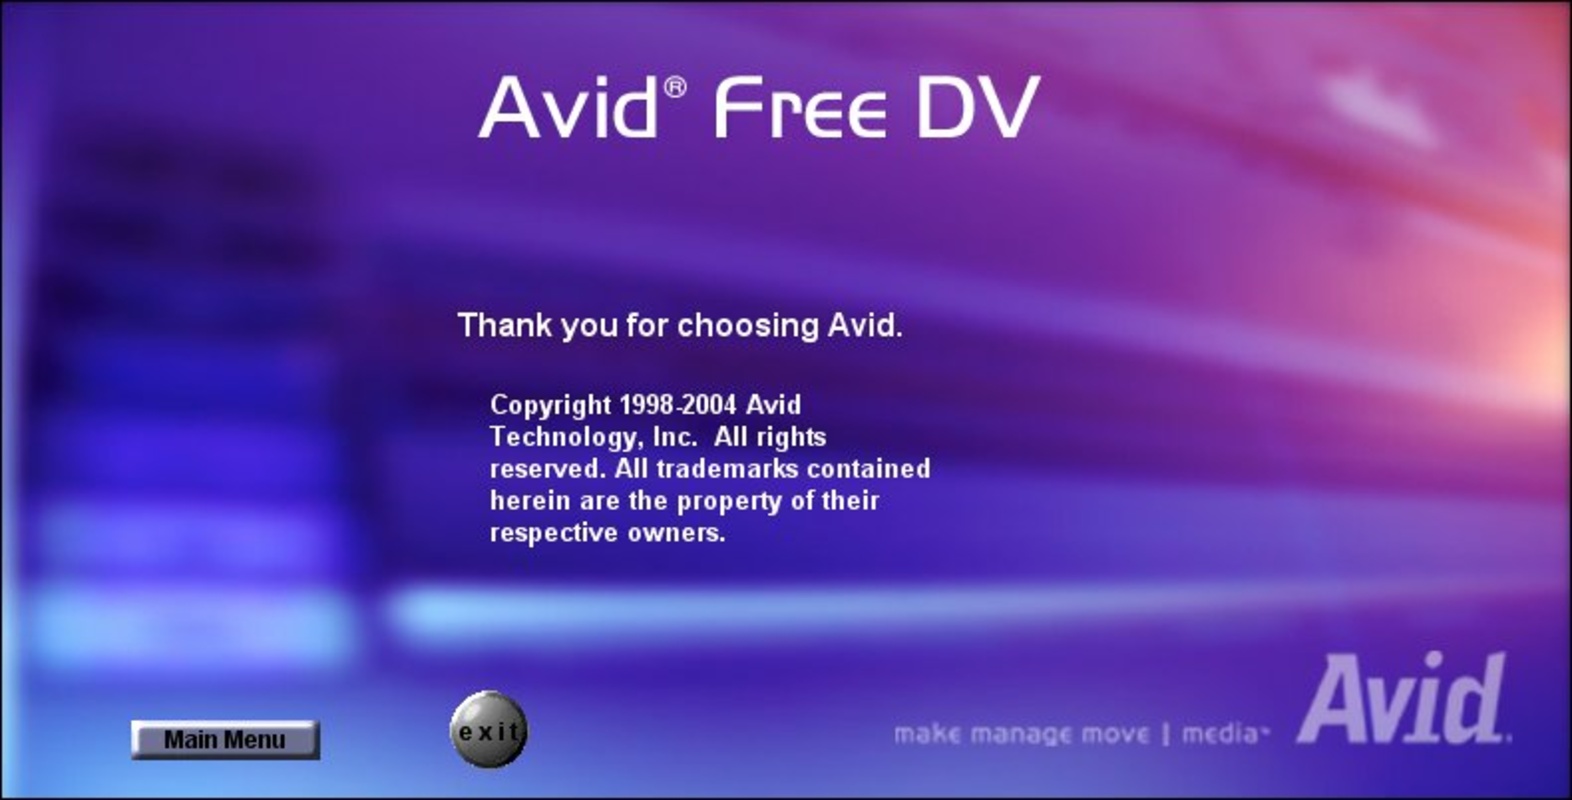 Avid Free DV 1.6.1 for Windows Screenshot 1